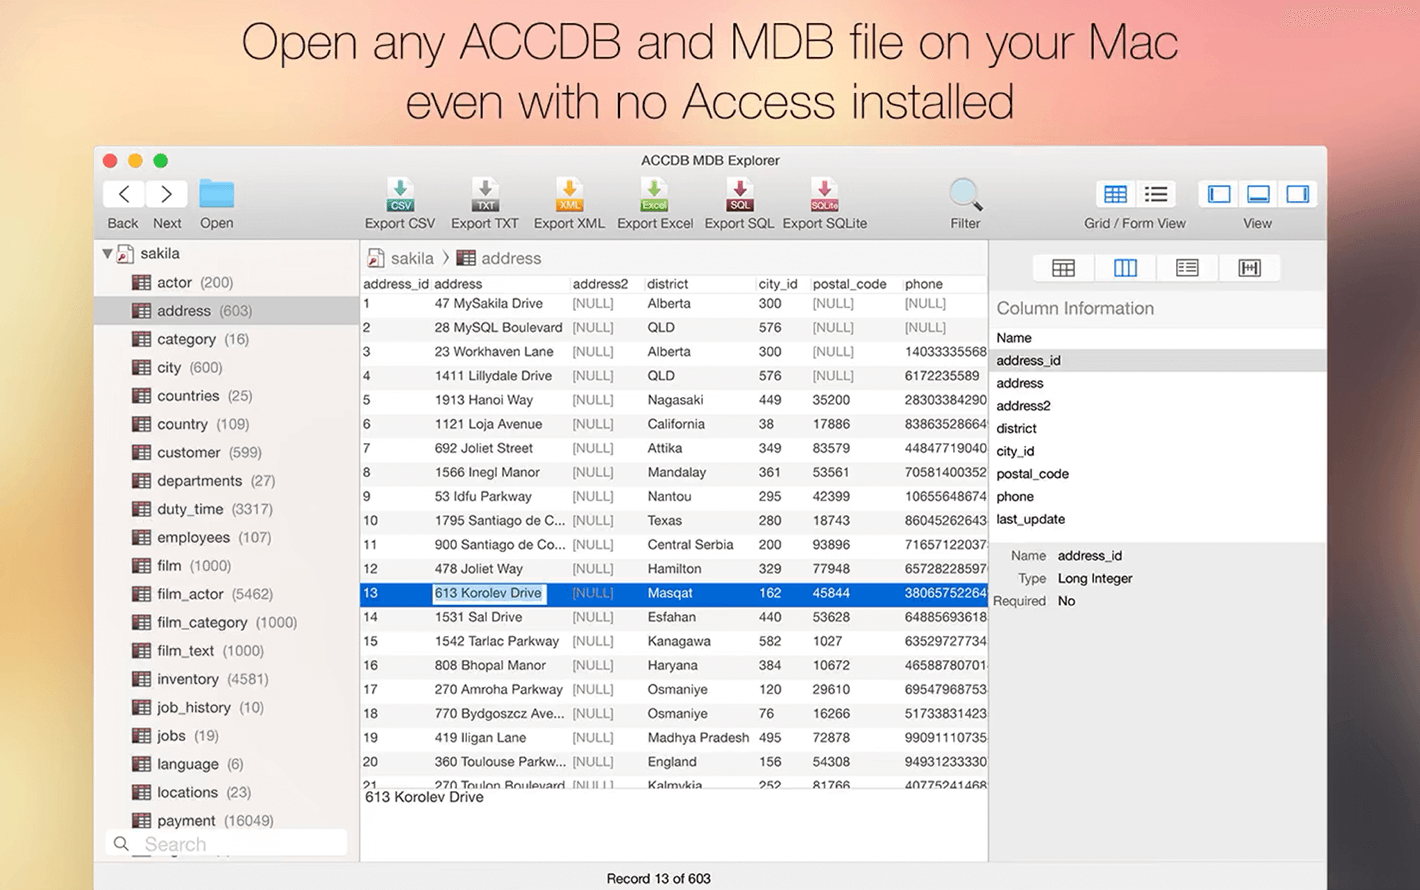 mdb accdb viewer free version for mac